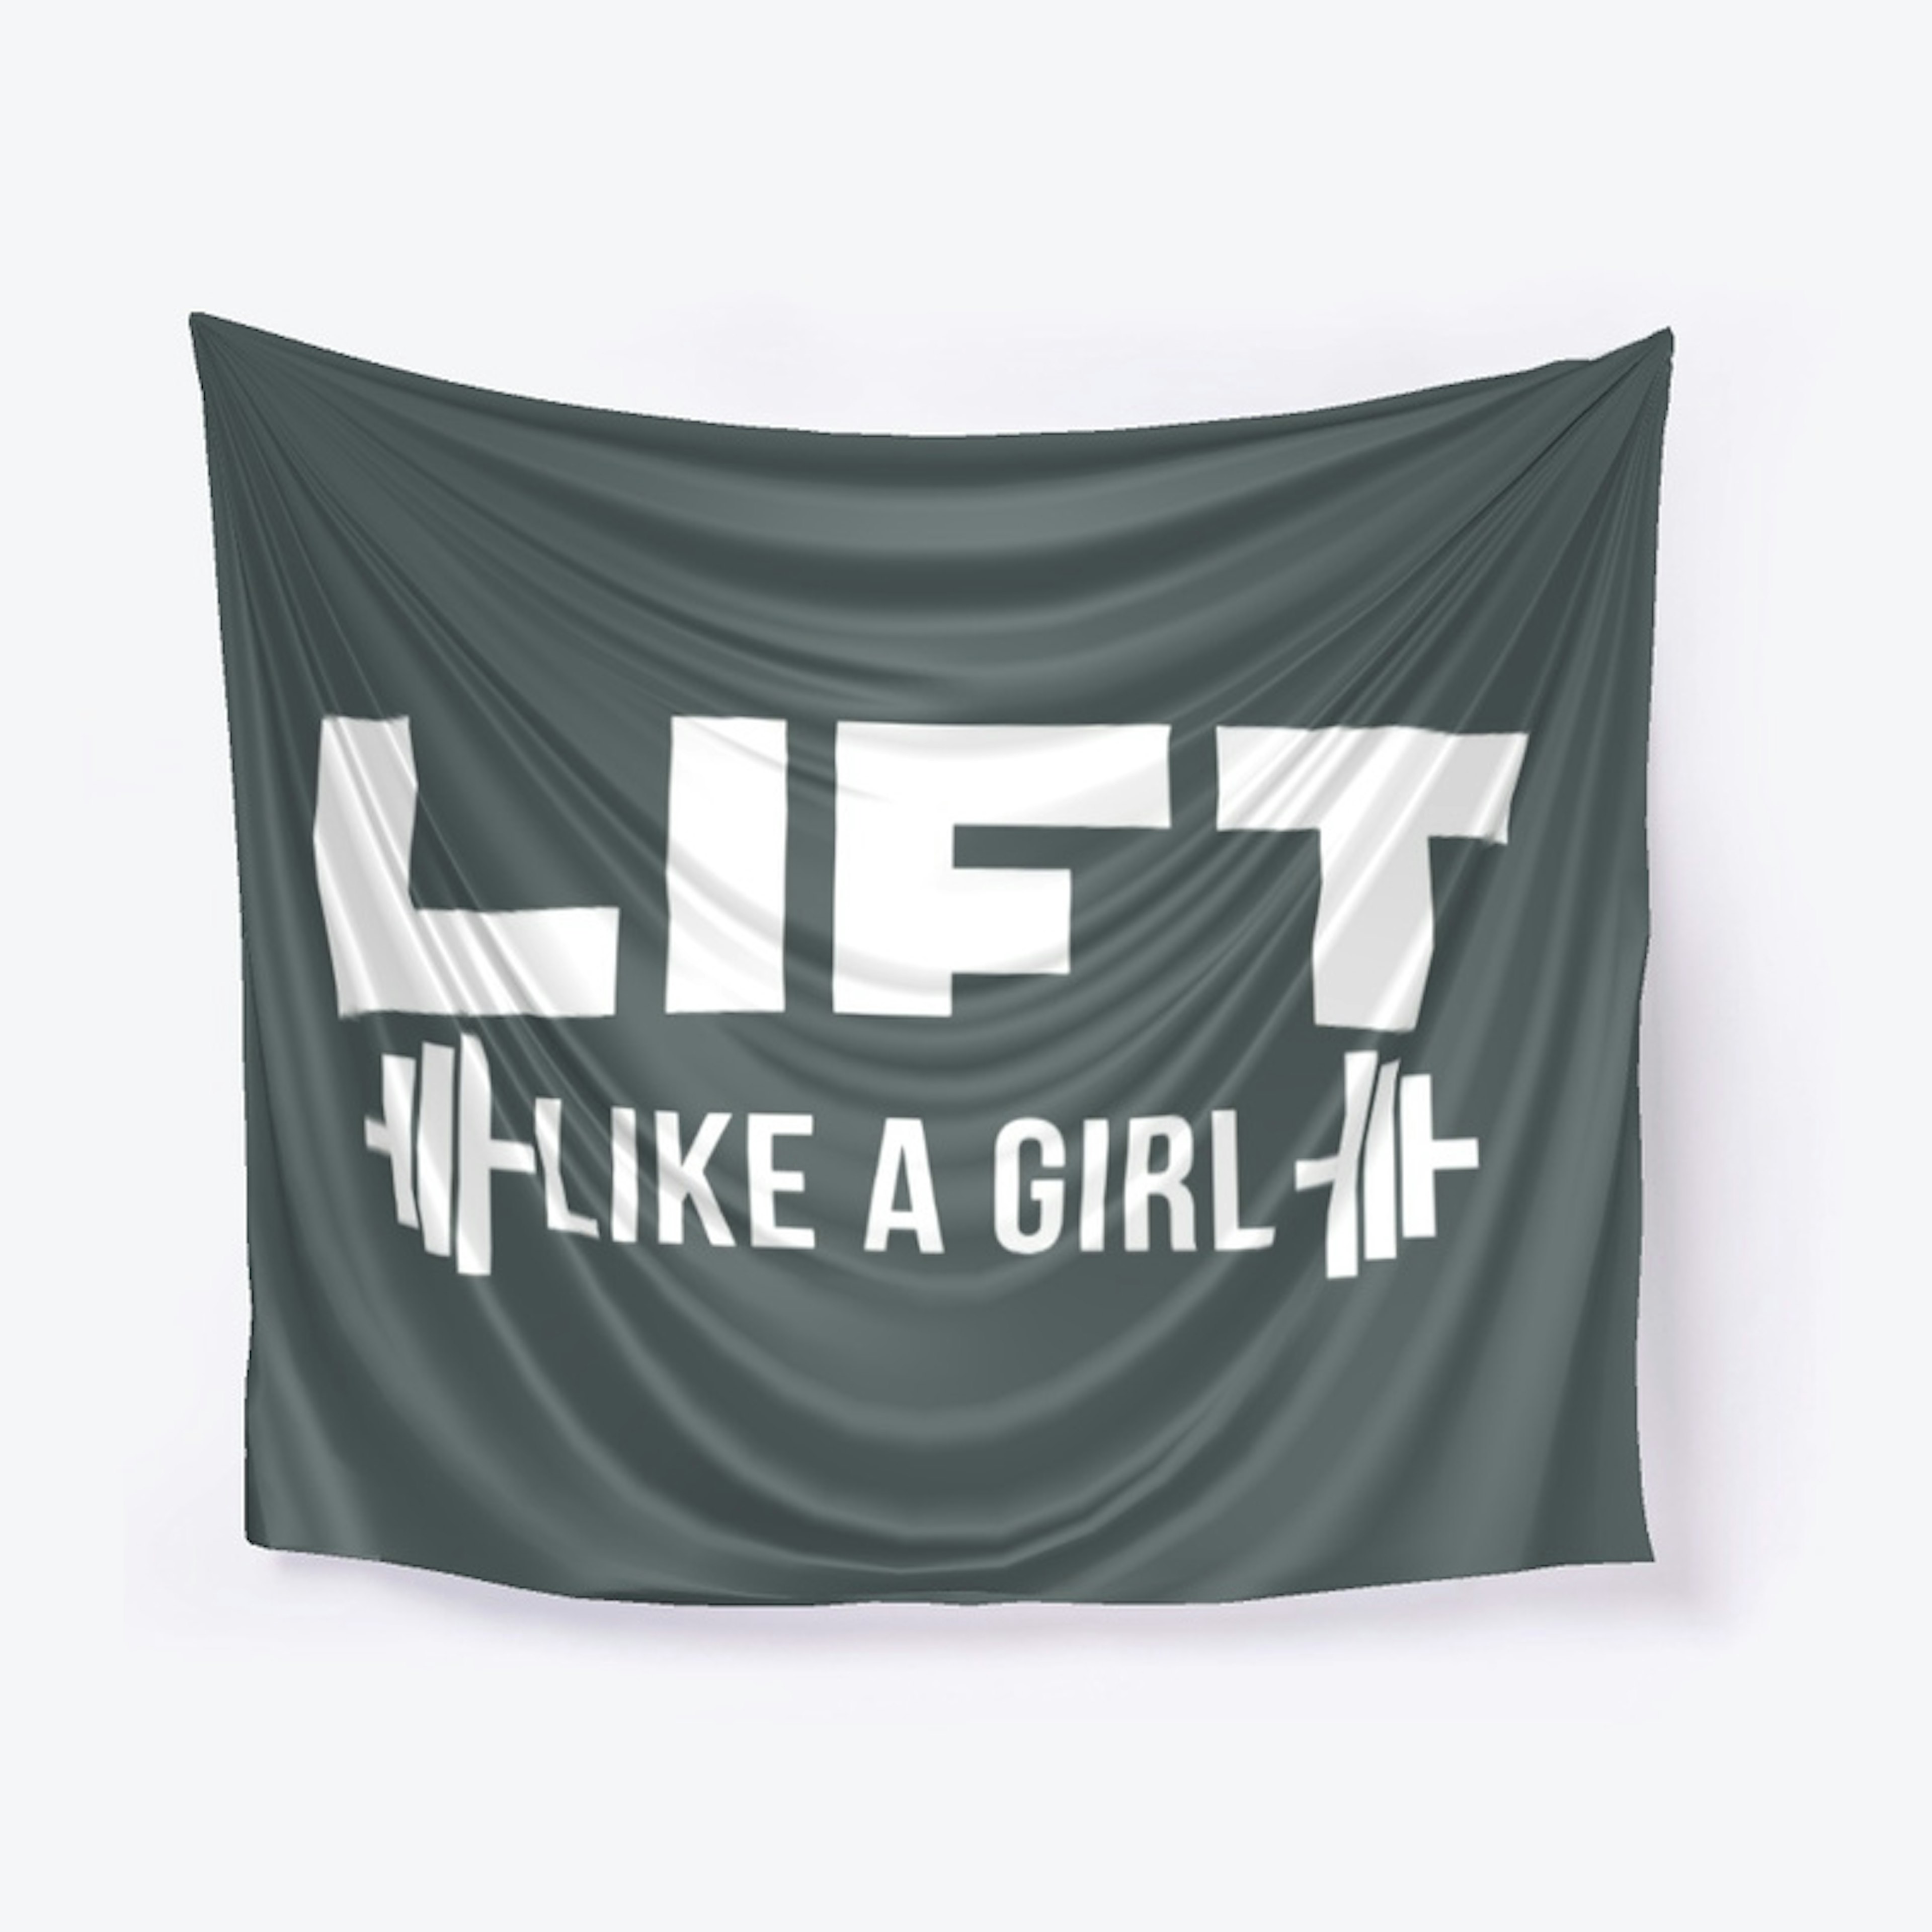 Lift Like a Girl Wall Tapestry V1.0